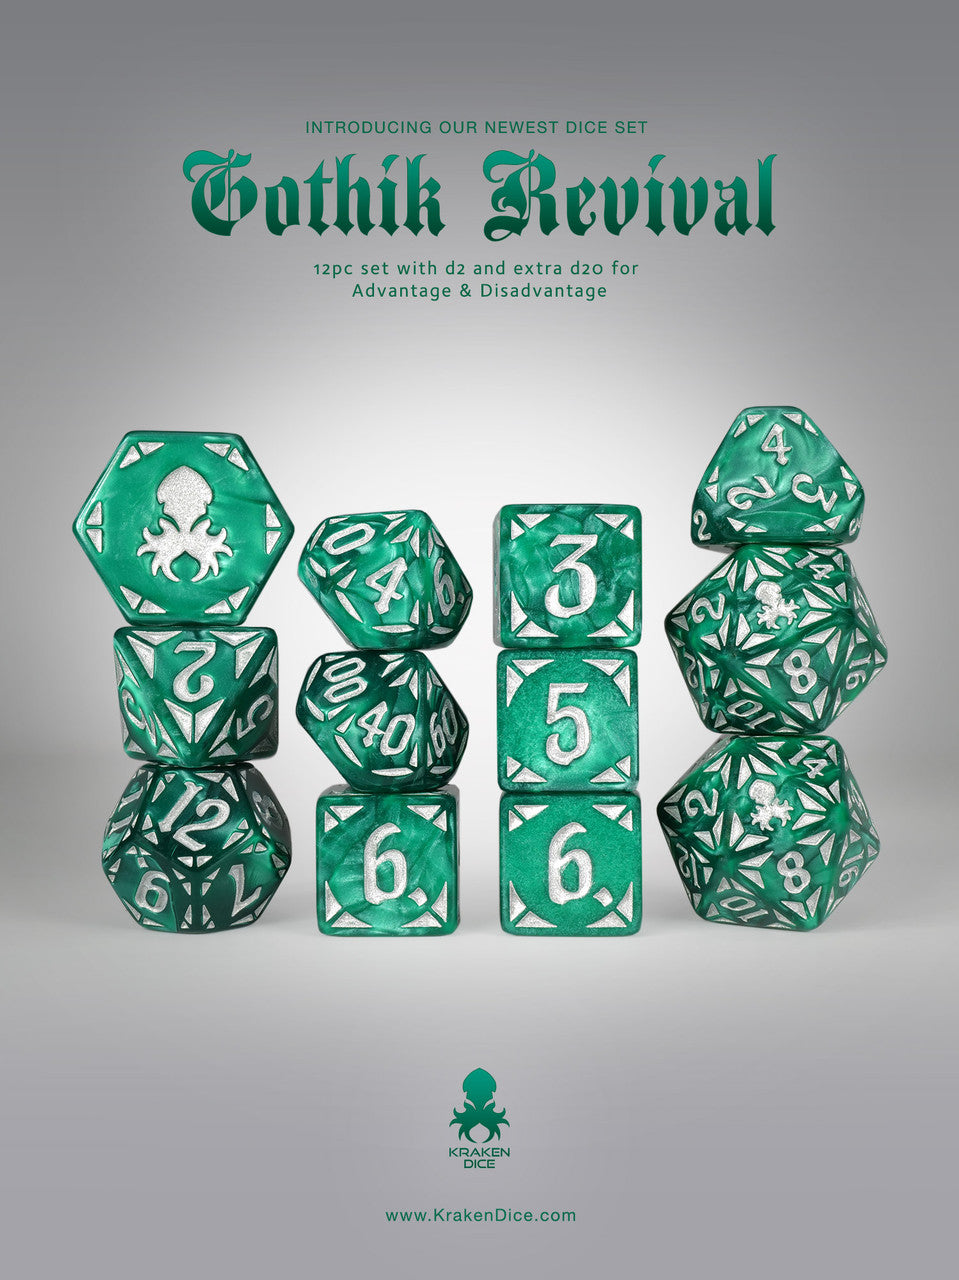 Green Gothik Revival  RPG 12pc Dice Set